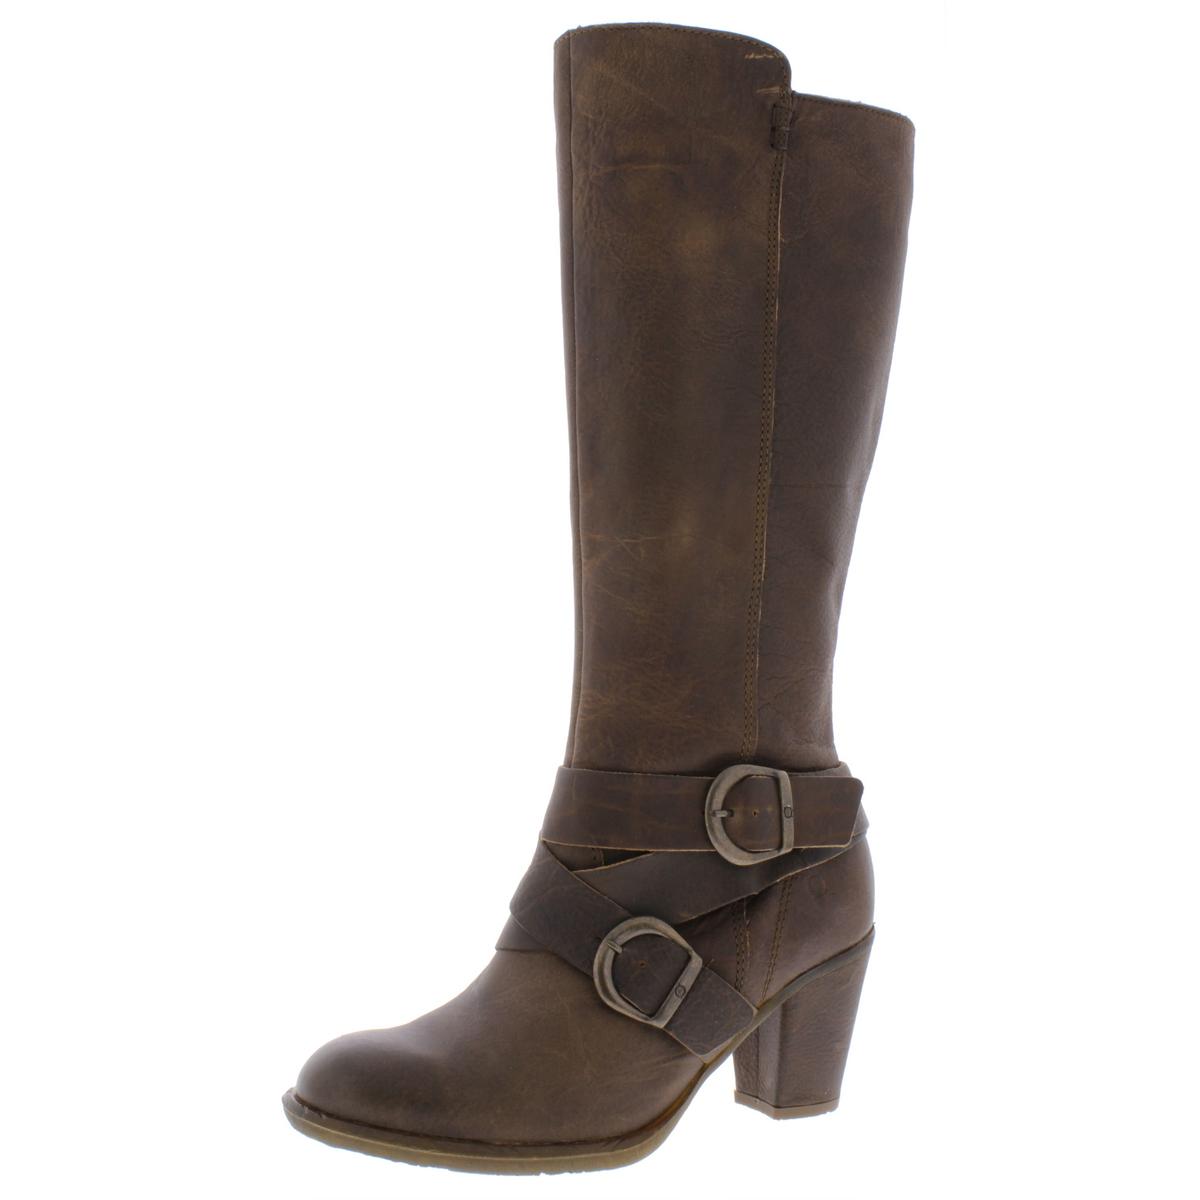 Born Womens Cresent Brown Riding Boots Shoes 8.5 Medium (B,M) 40 EU ...